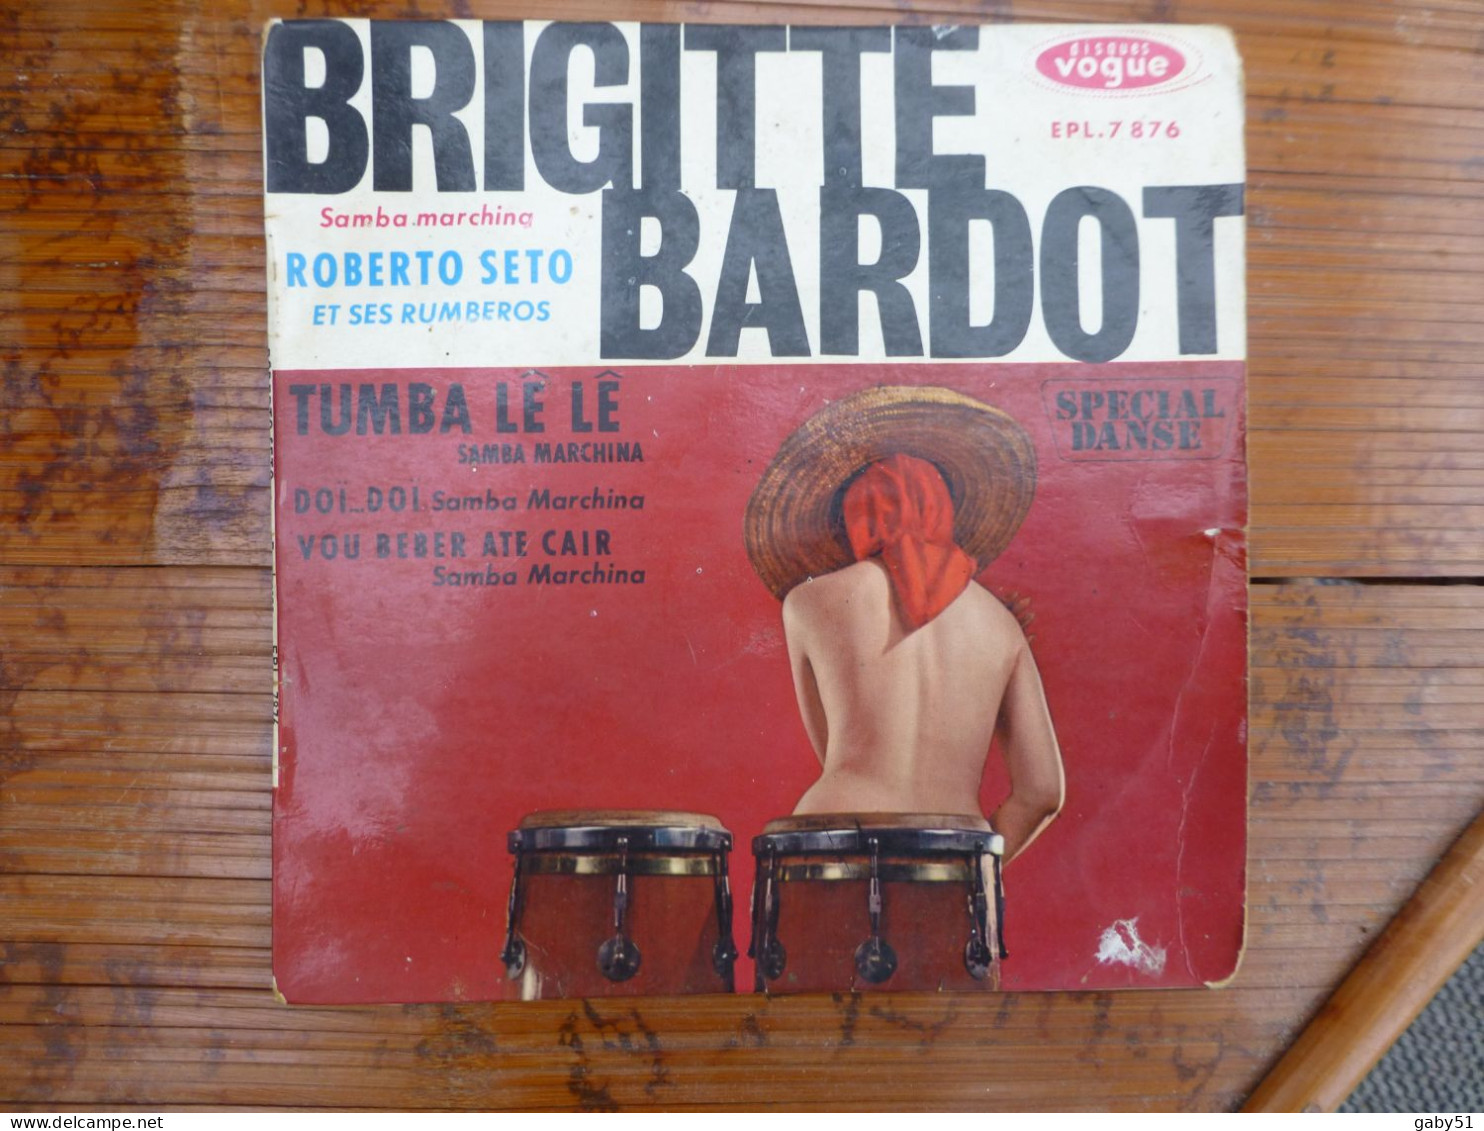 Brigitte Bardot Roberto Seto, Tumba Le Le Vogue EPL 7876 - 45 Rpm - Maxi-Single